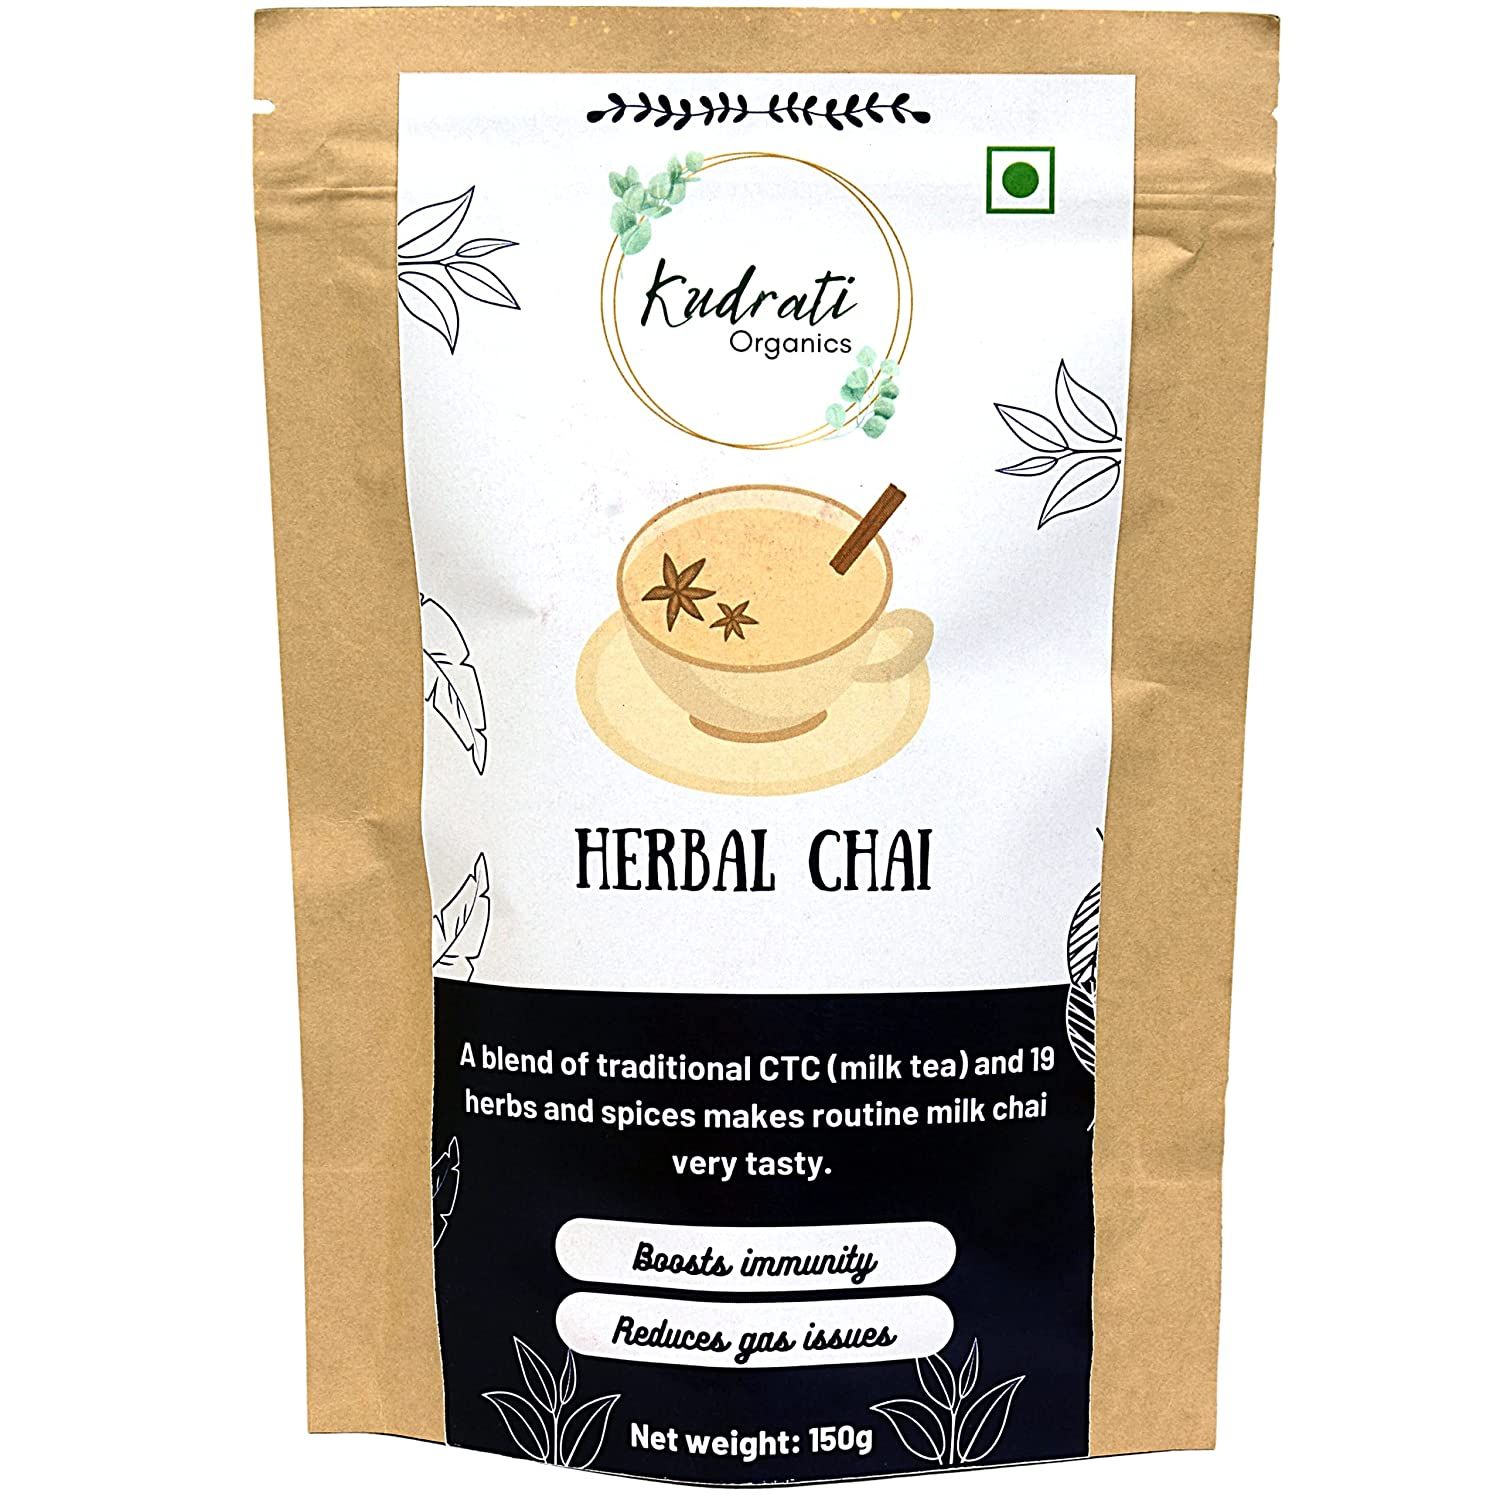 Kudrati Organics Herbal Chai Image